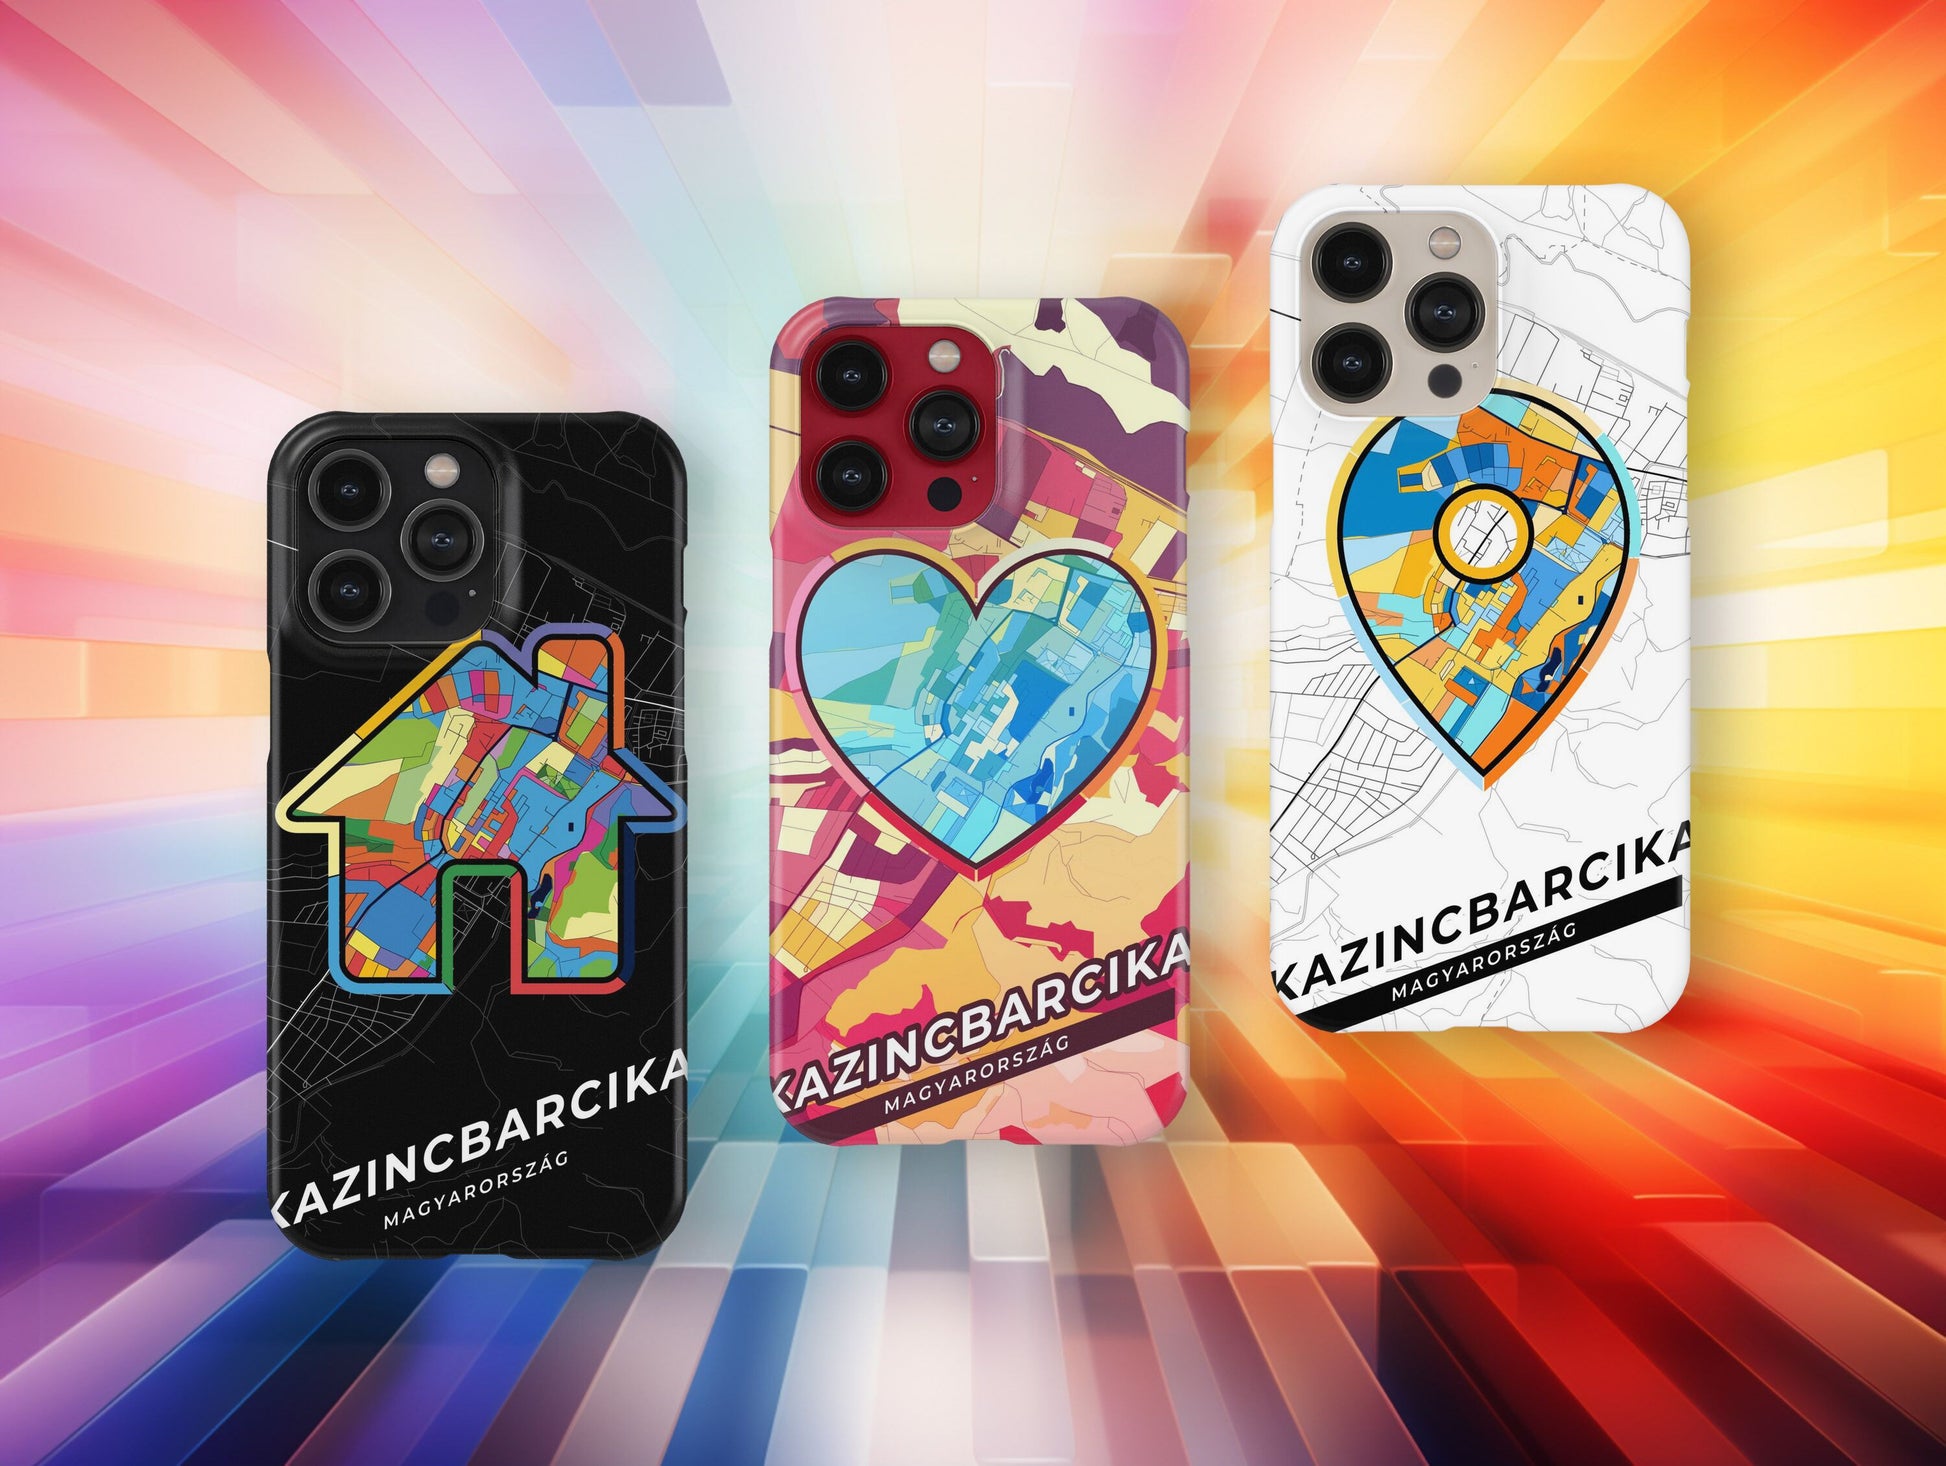 Kazincbarcika Hungary slim phone case with colorful icon. Birthday, wedding or housewarming gift. Couple match cases.